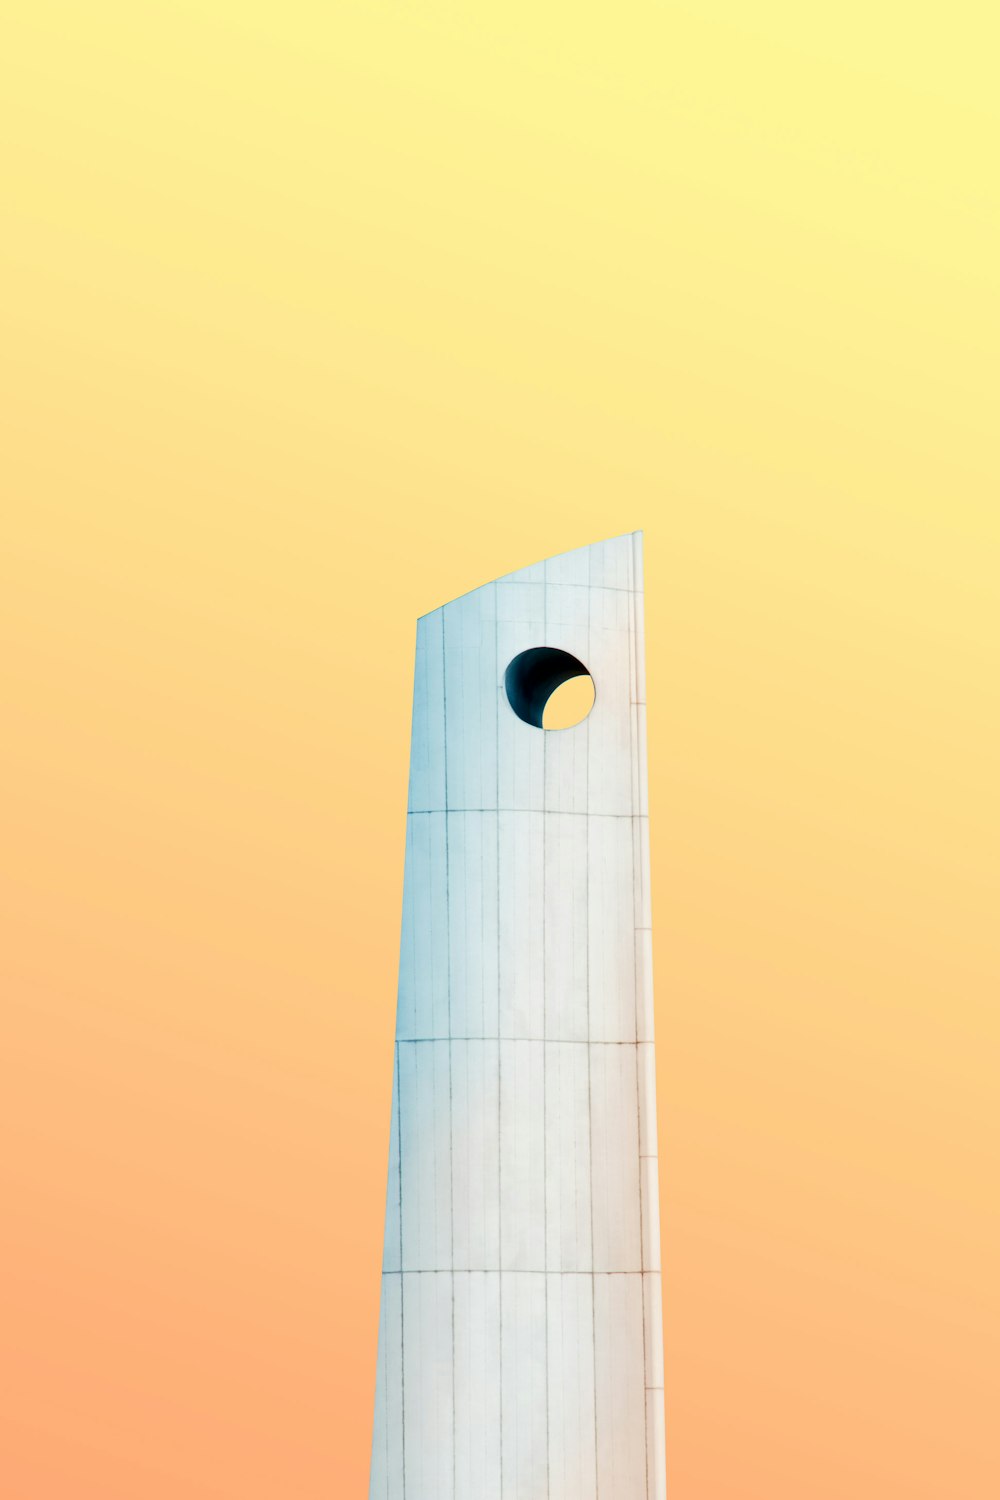 white tower